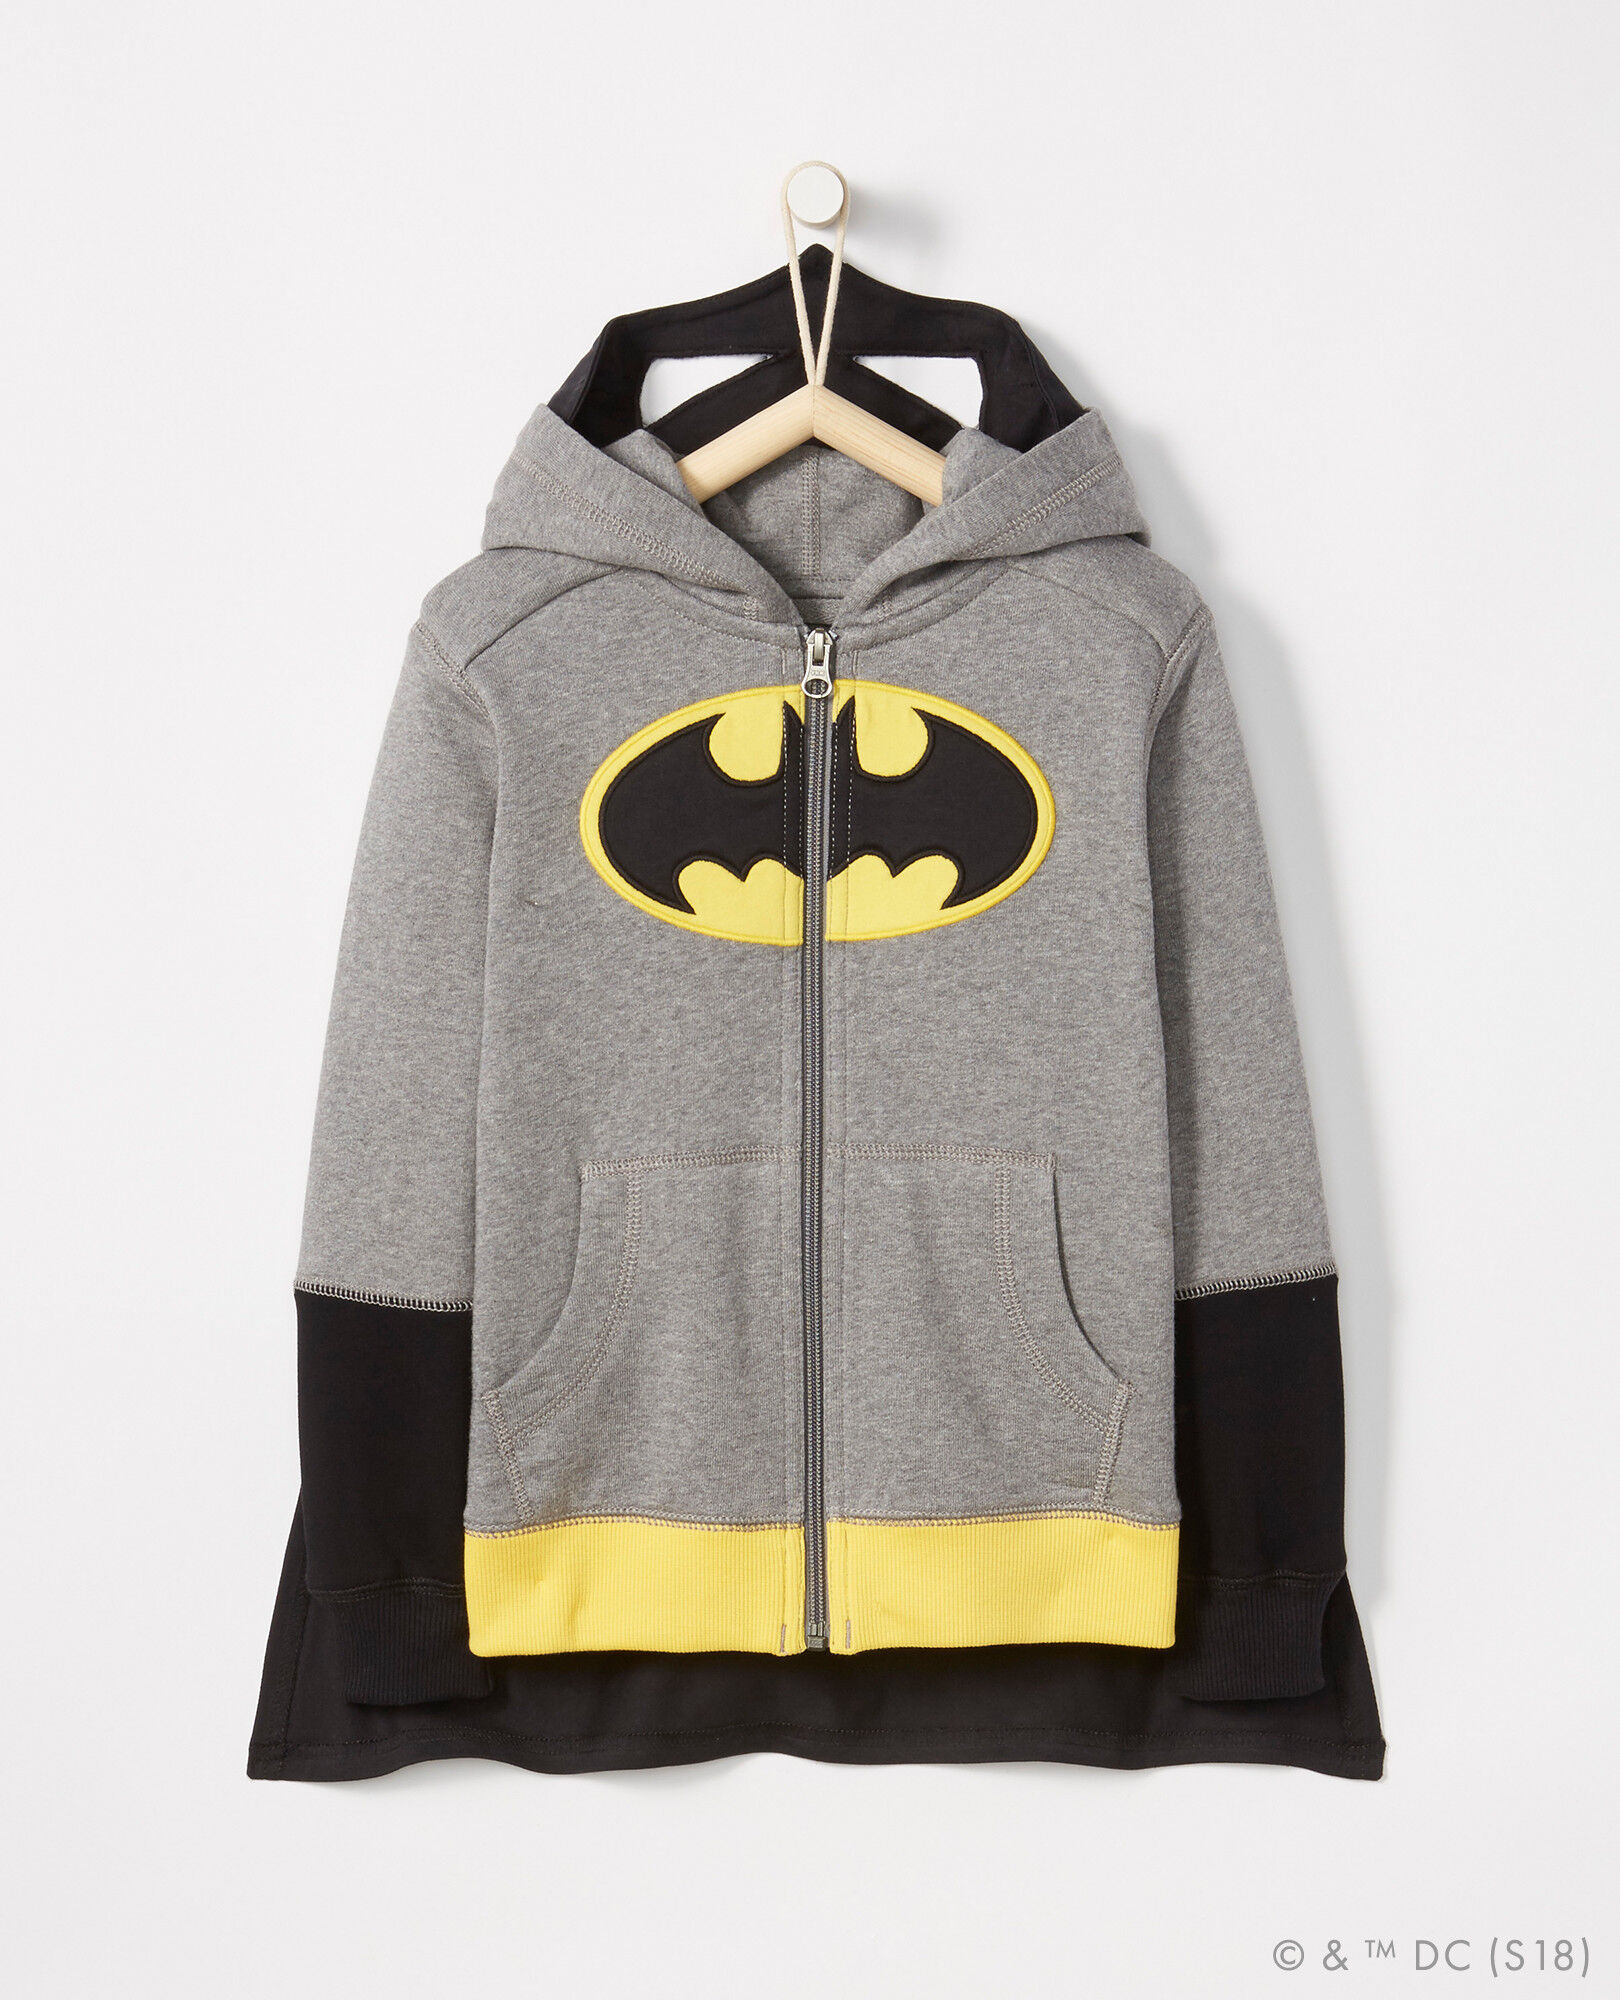 batman jacket with cape